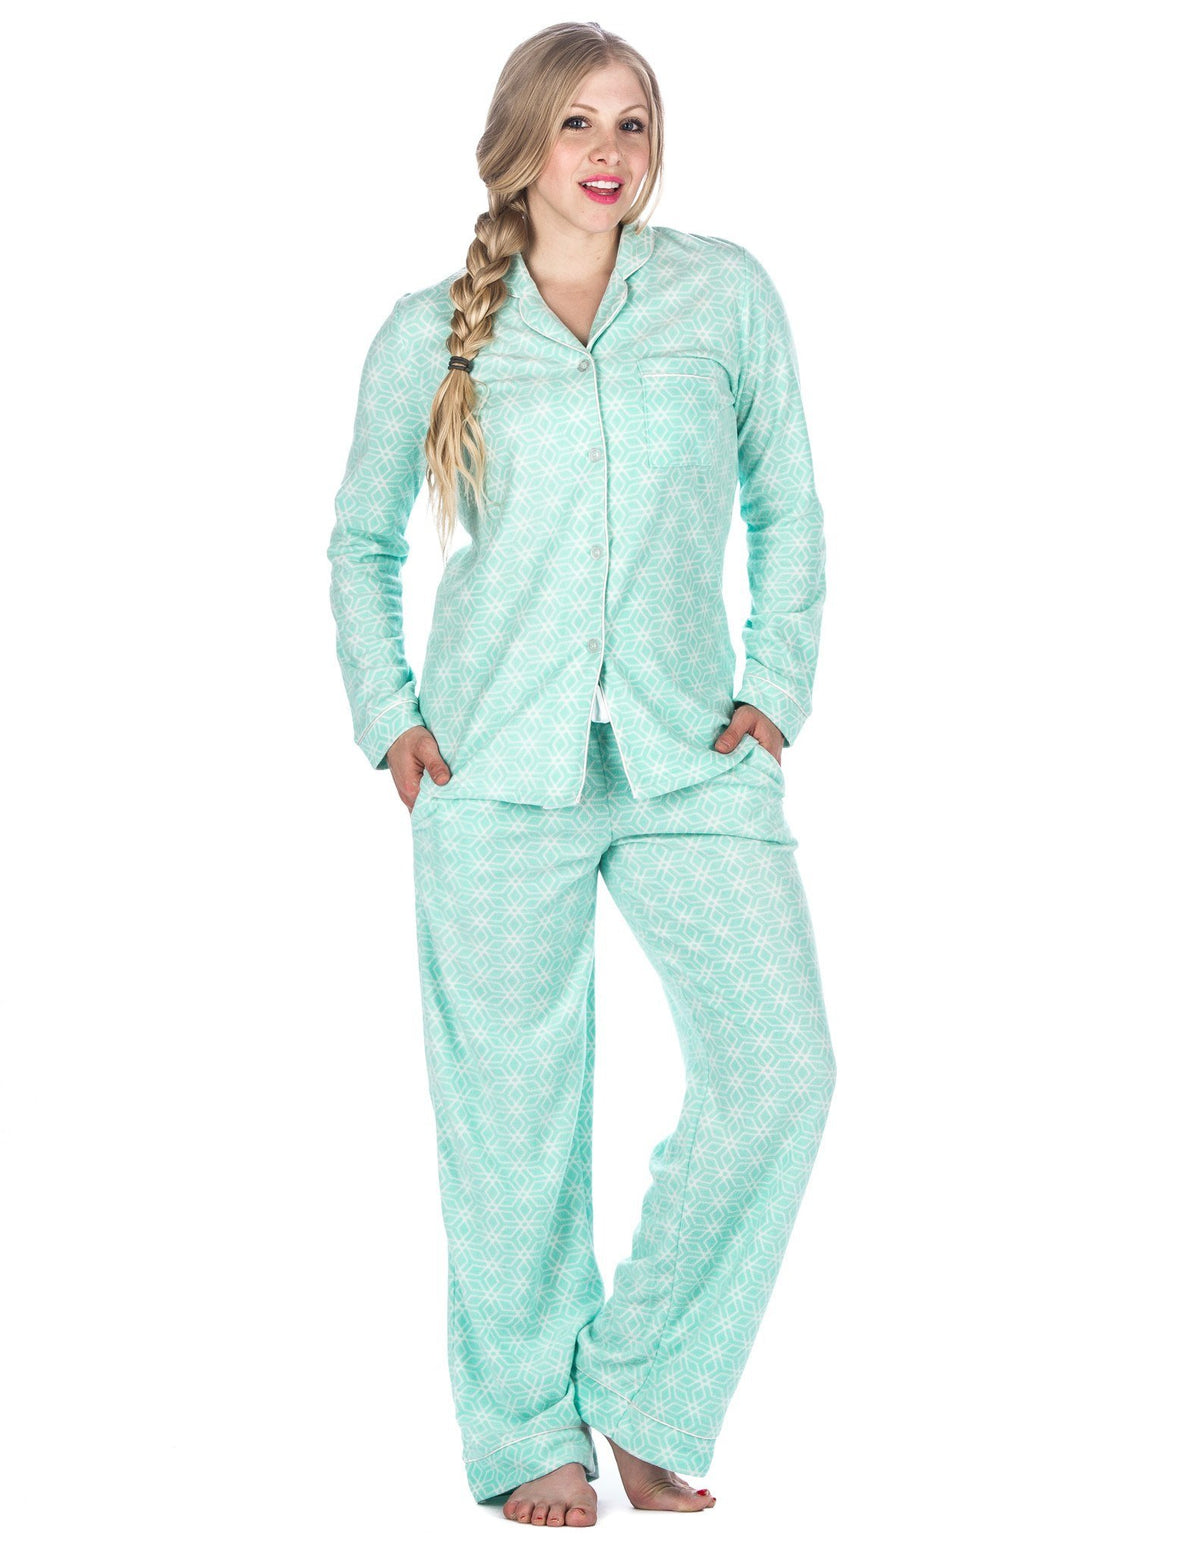 Box Packaged Women's Microfleece Pajama Sleepwear Set - Geoflakes - Blue